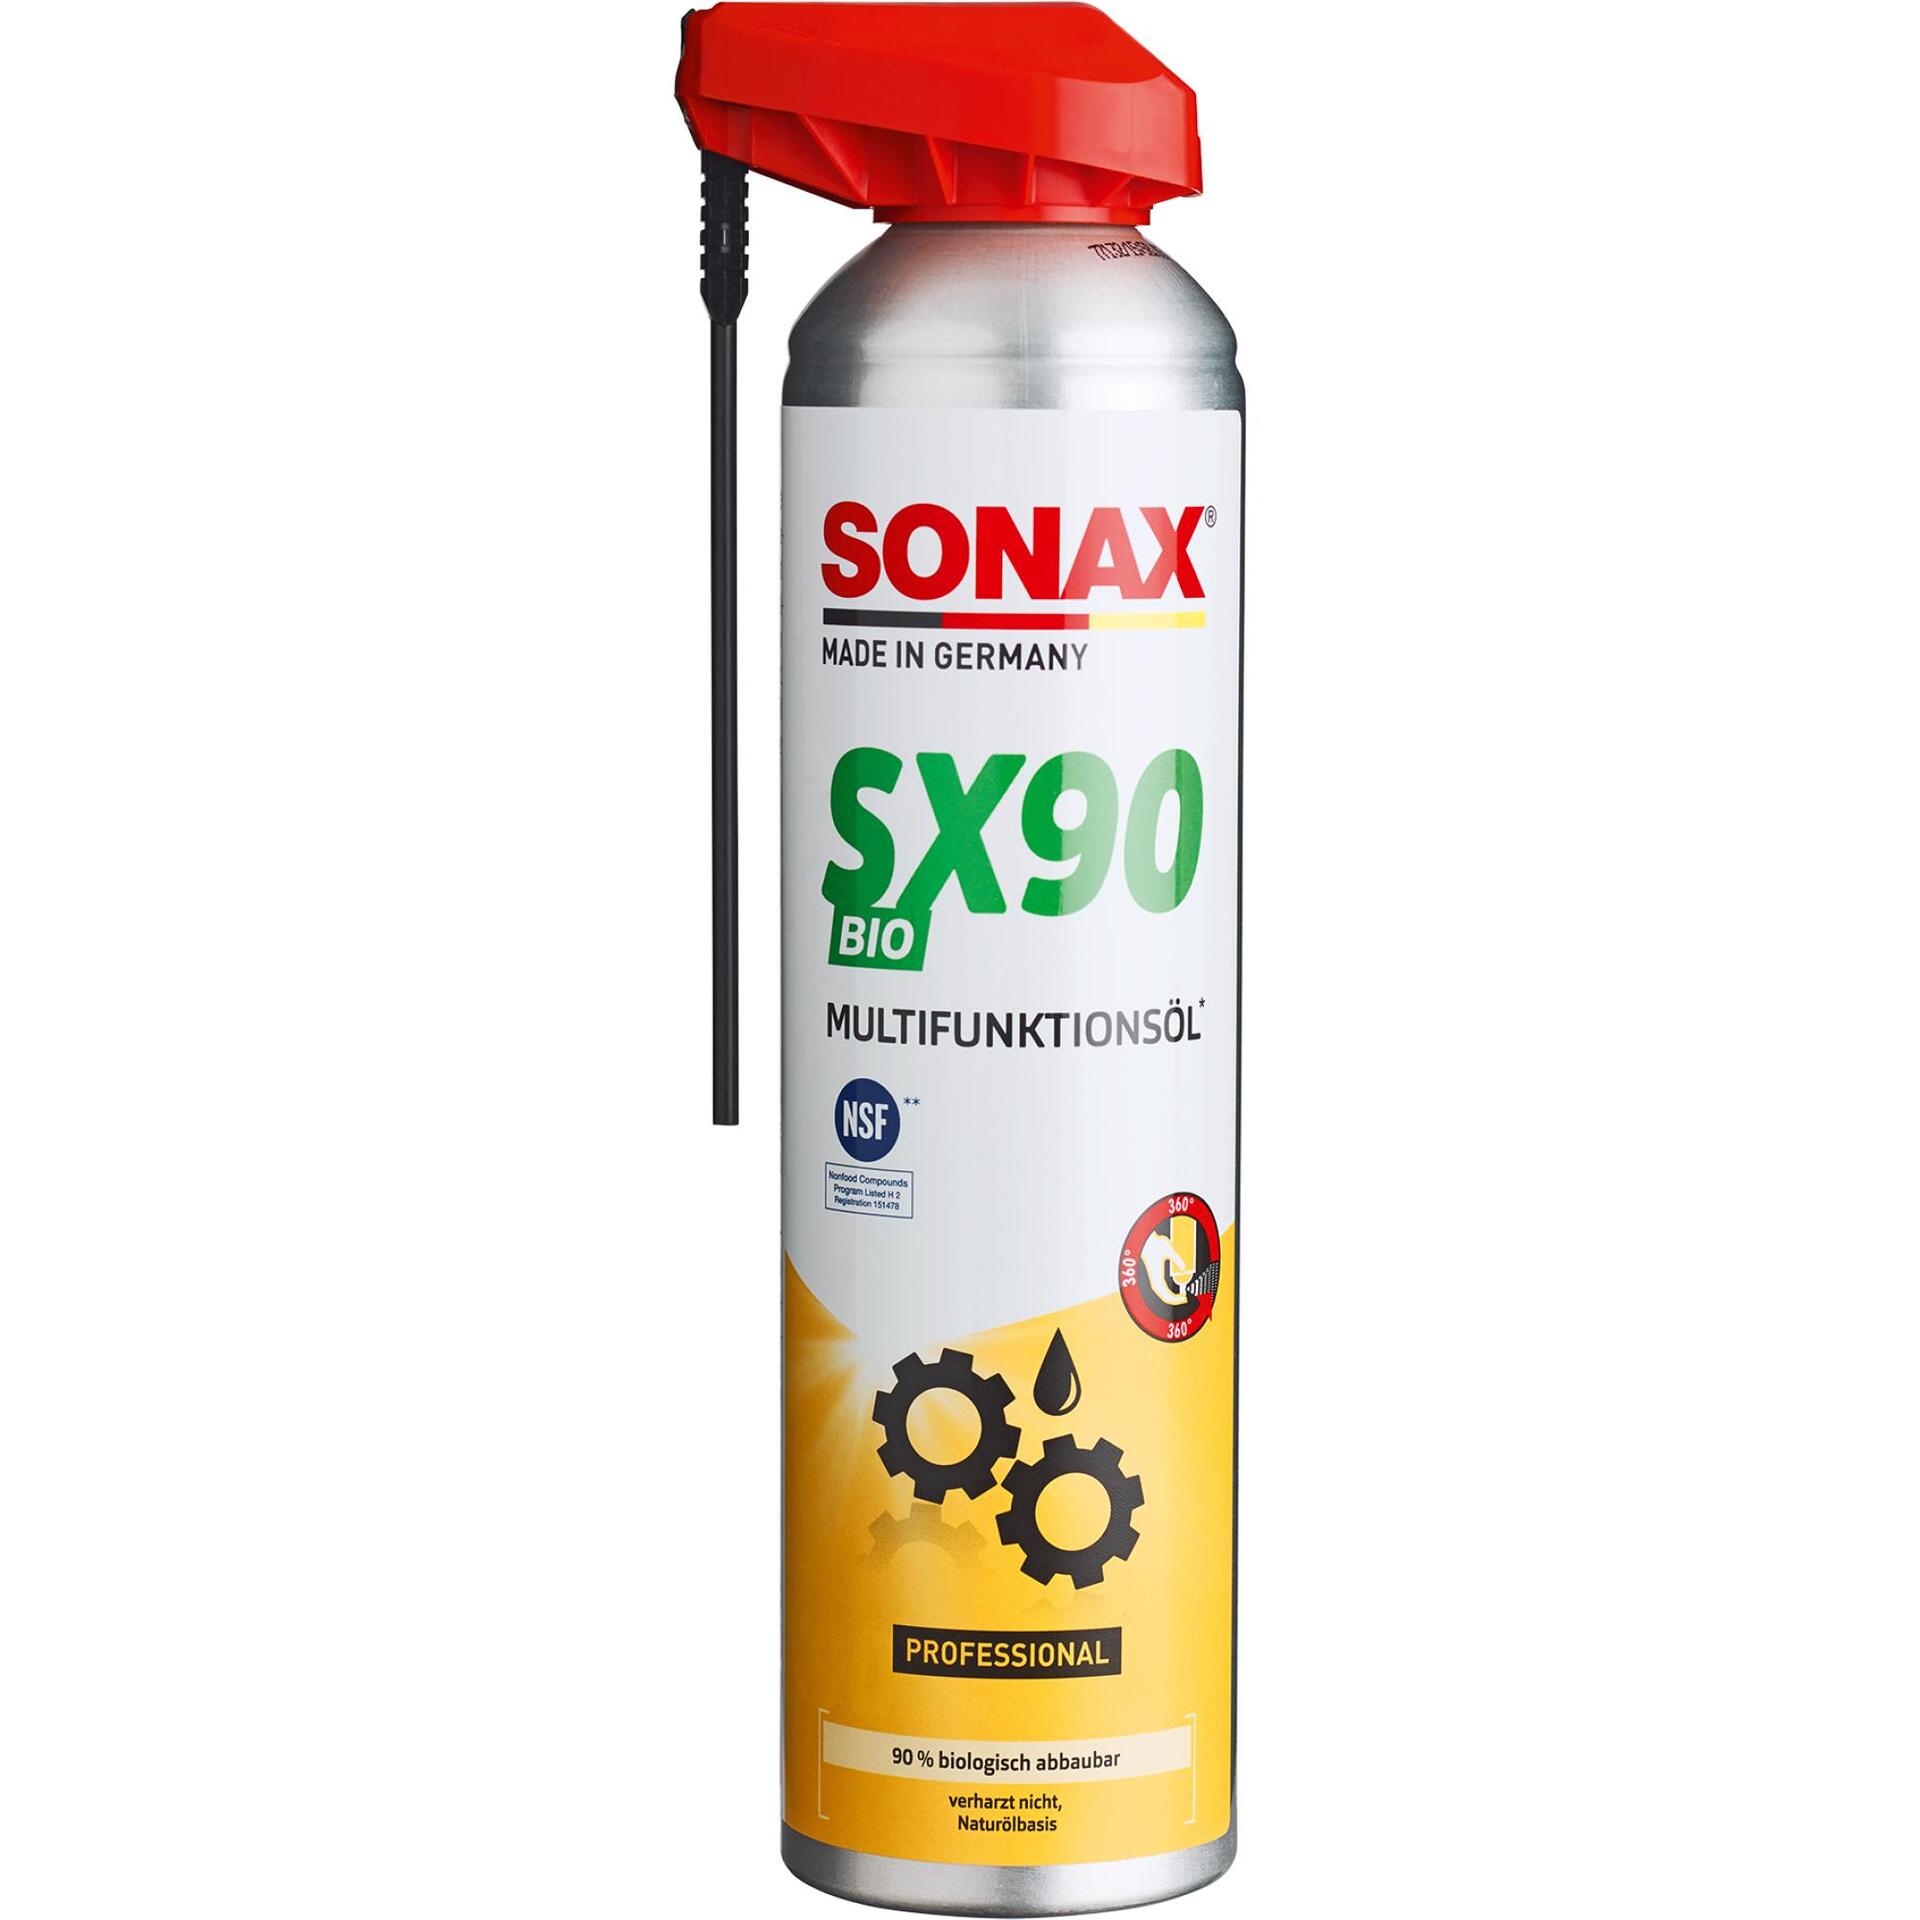 SONAX SX 90 BIO EasySpray 300ml